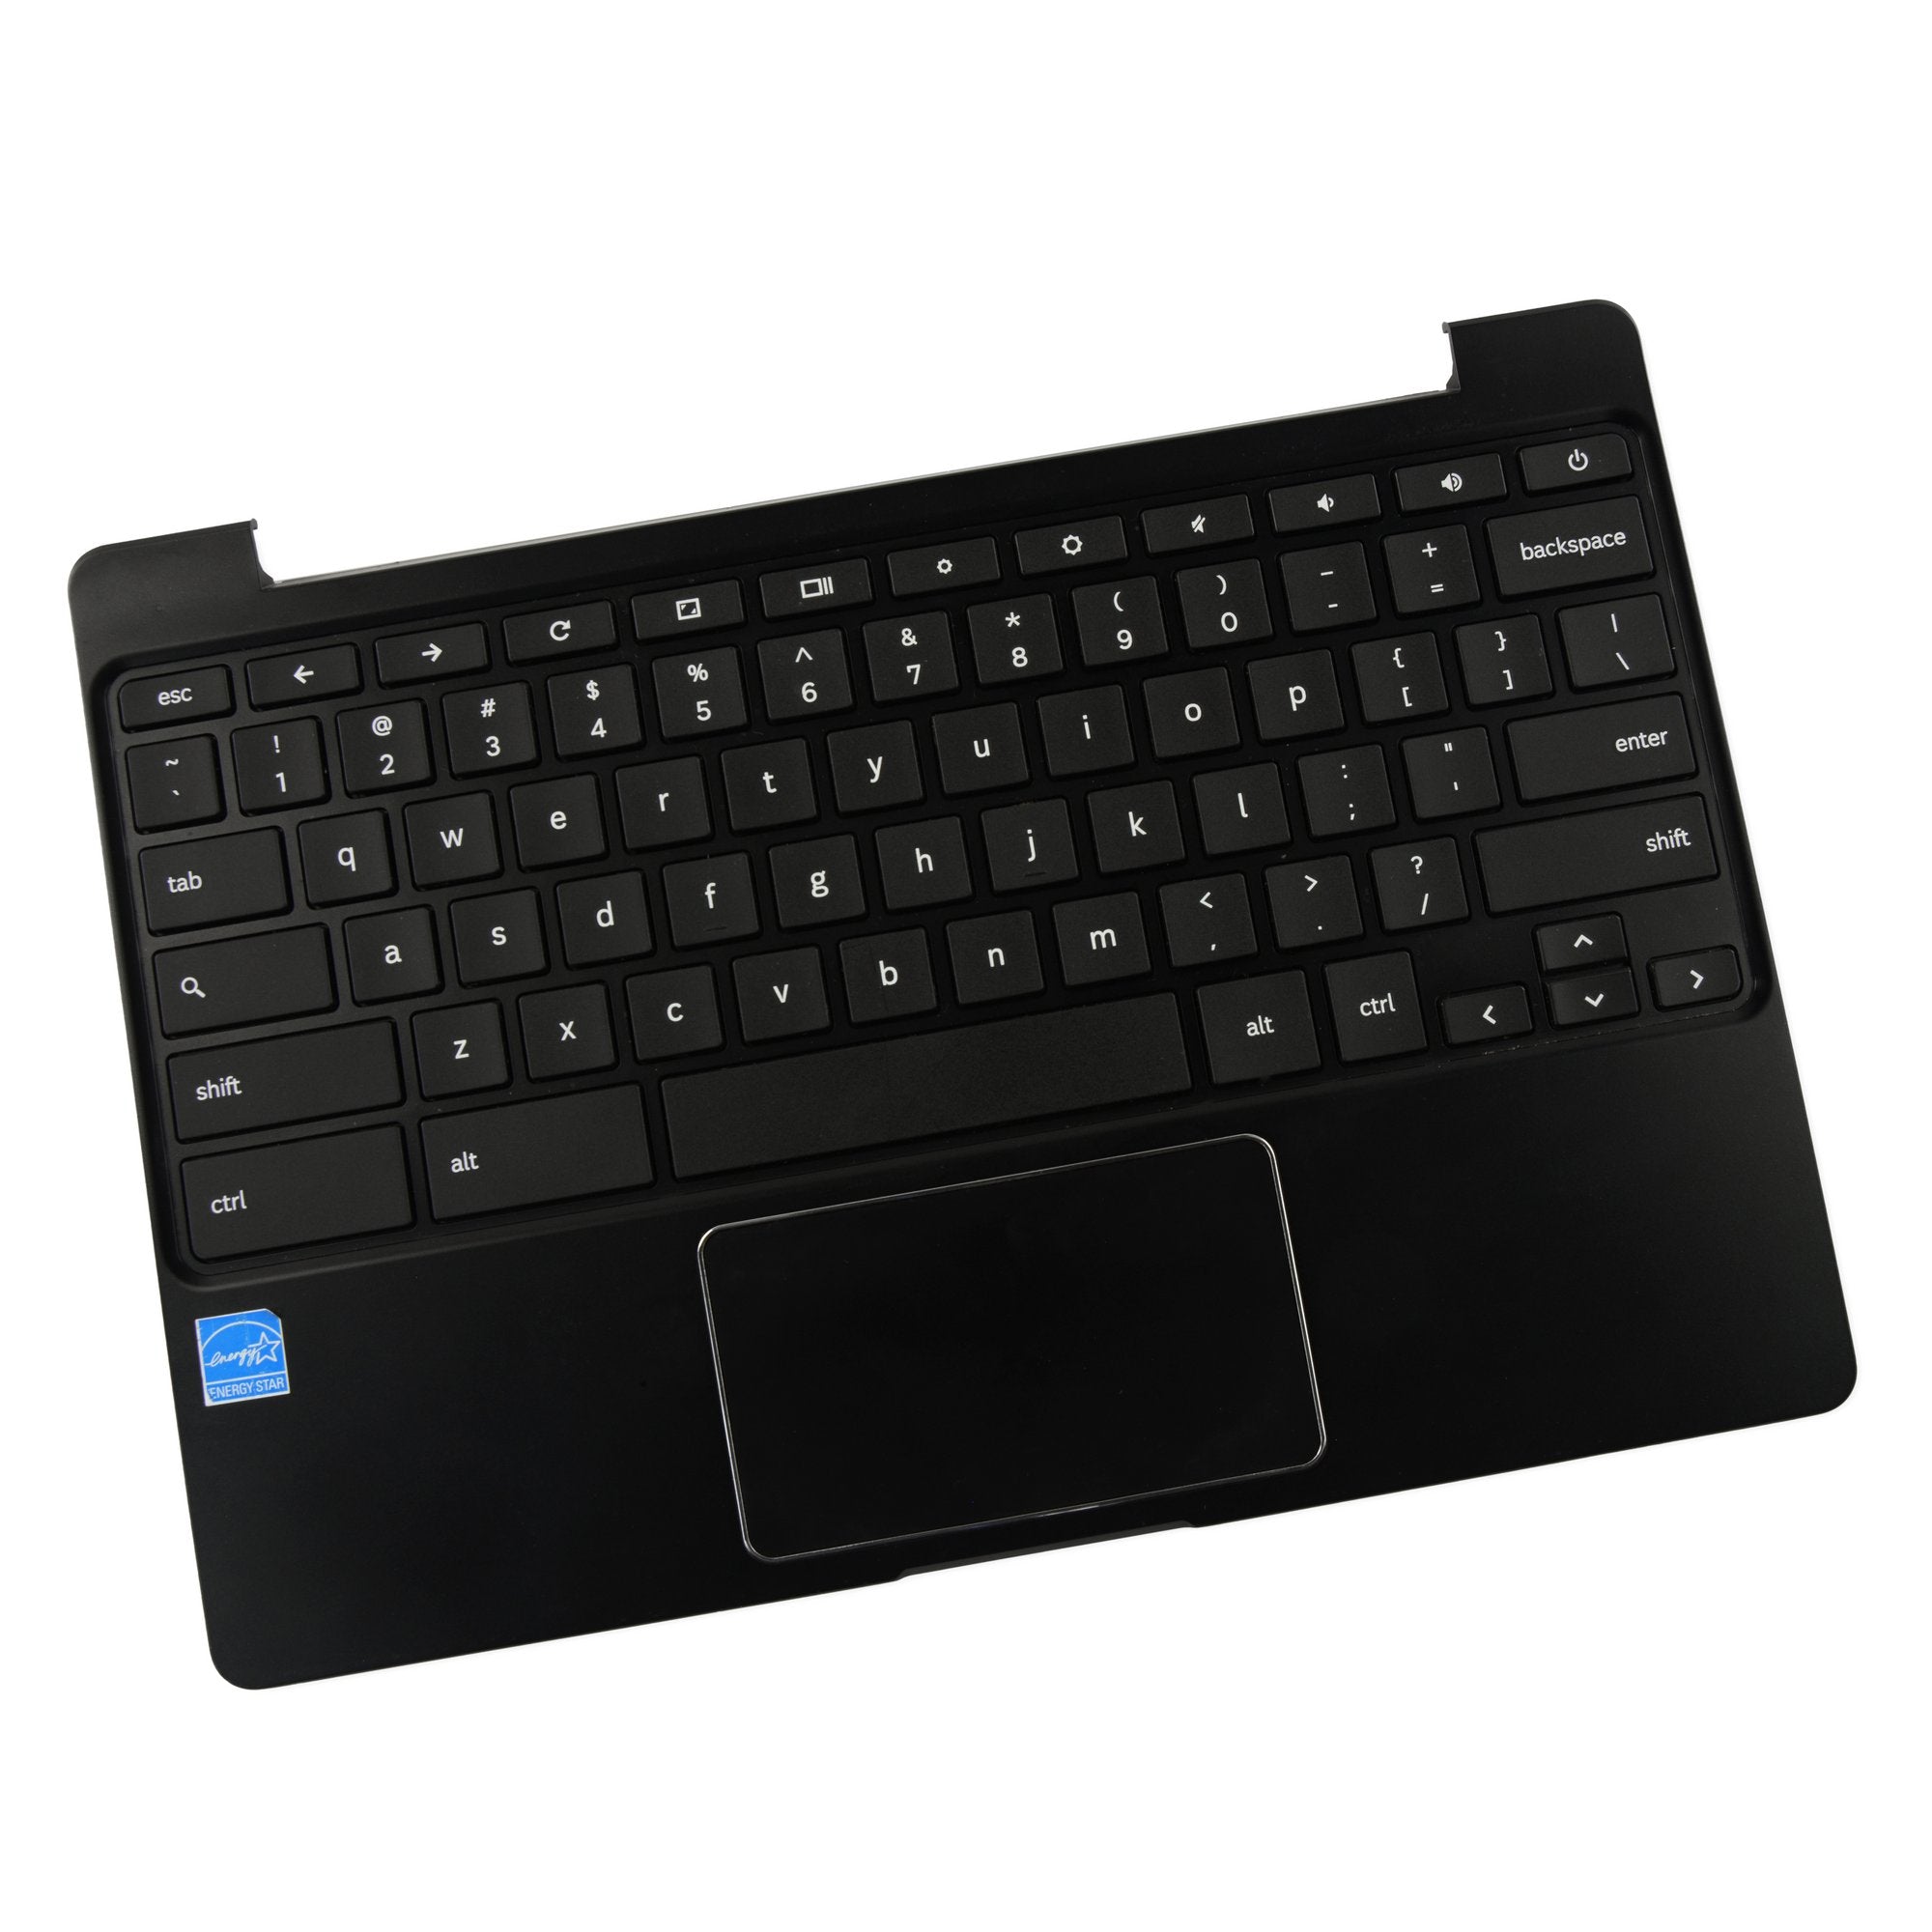 Samsung Chromebook XE503C12 Palmrest Keyboard Touchpad Assembly Black Used, A-Stock